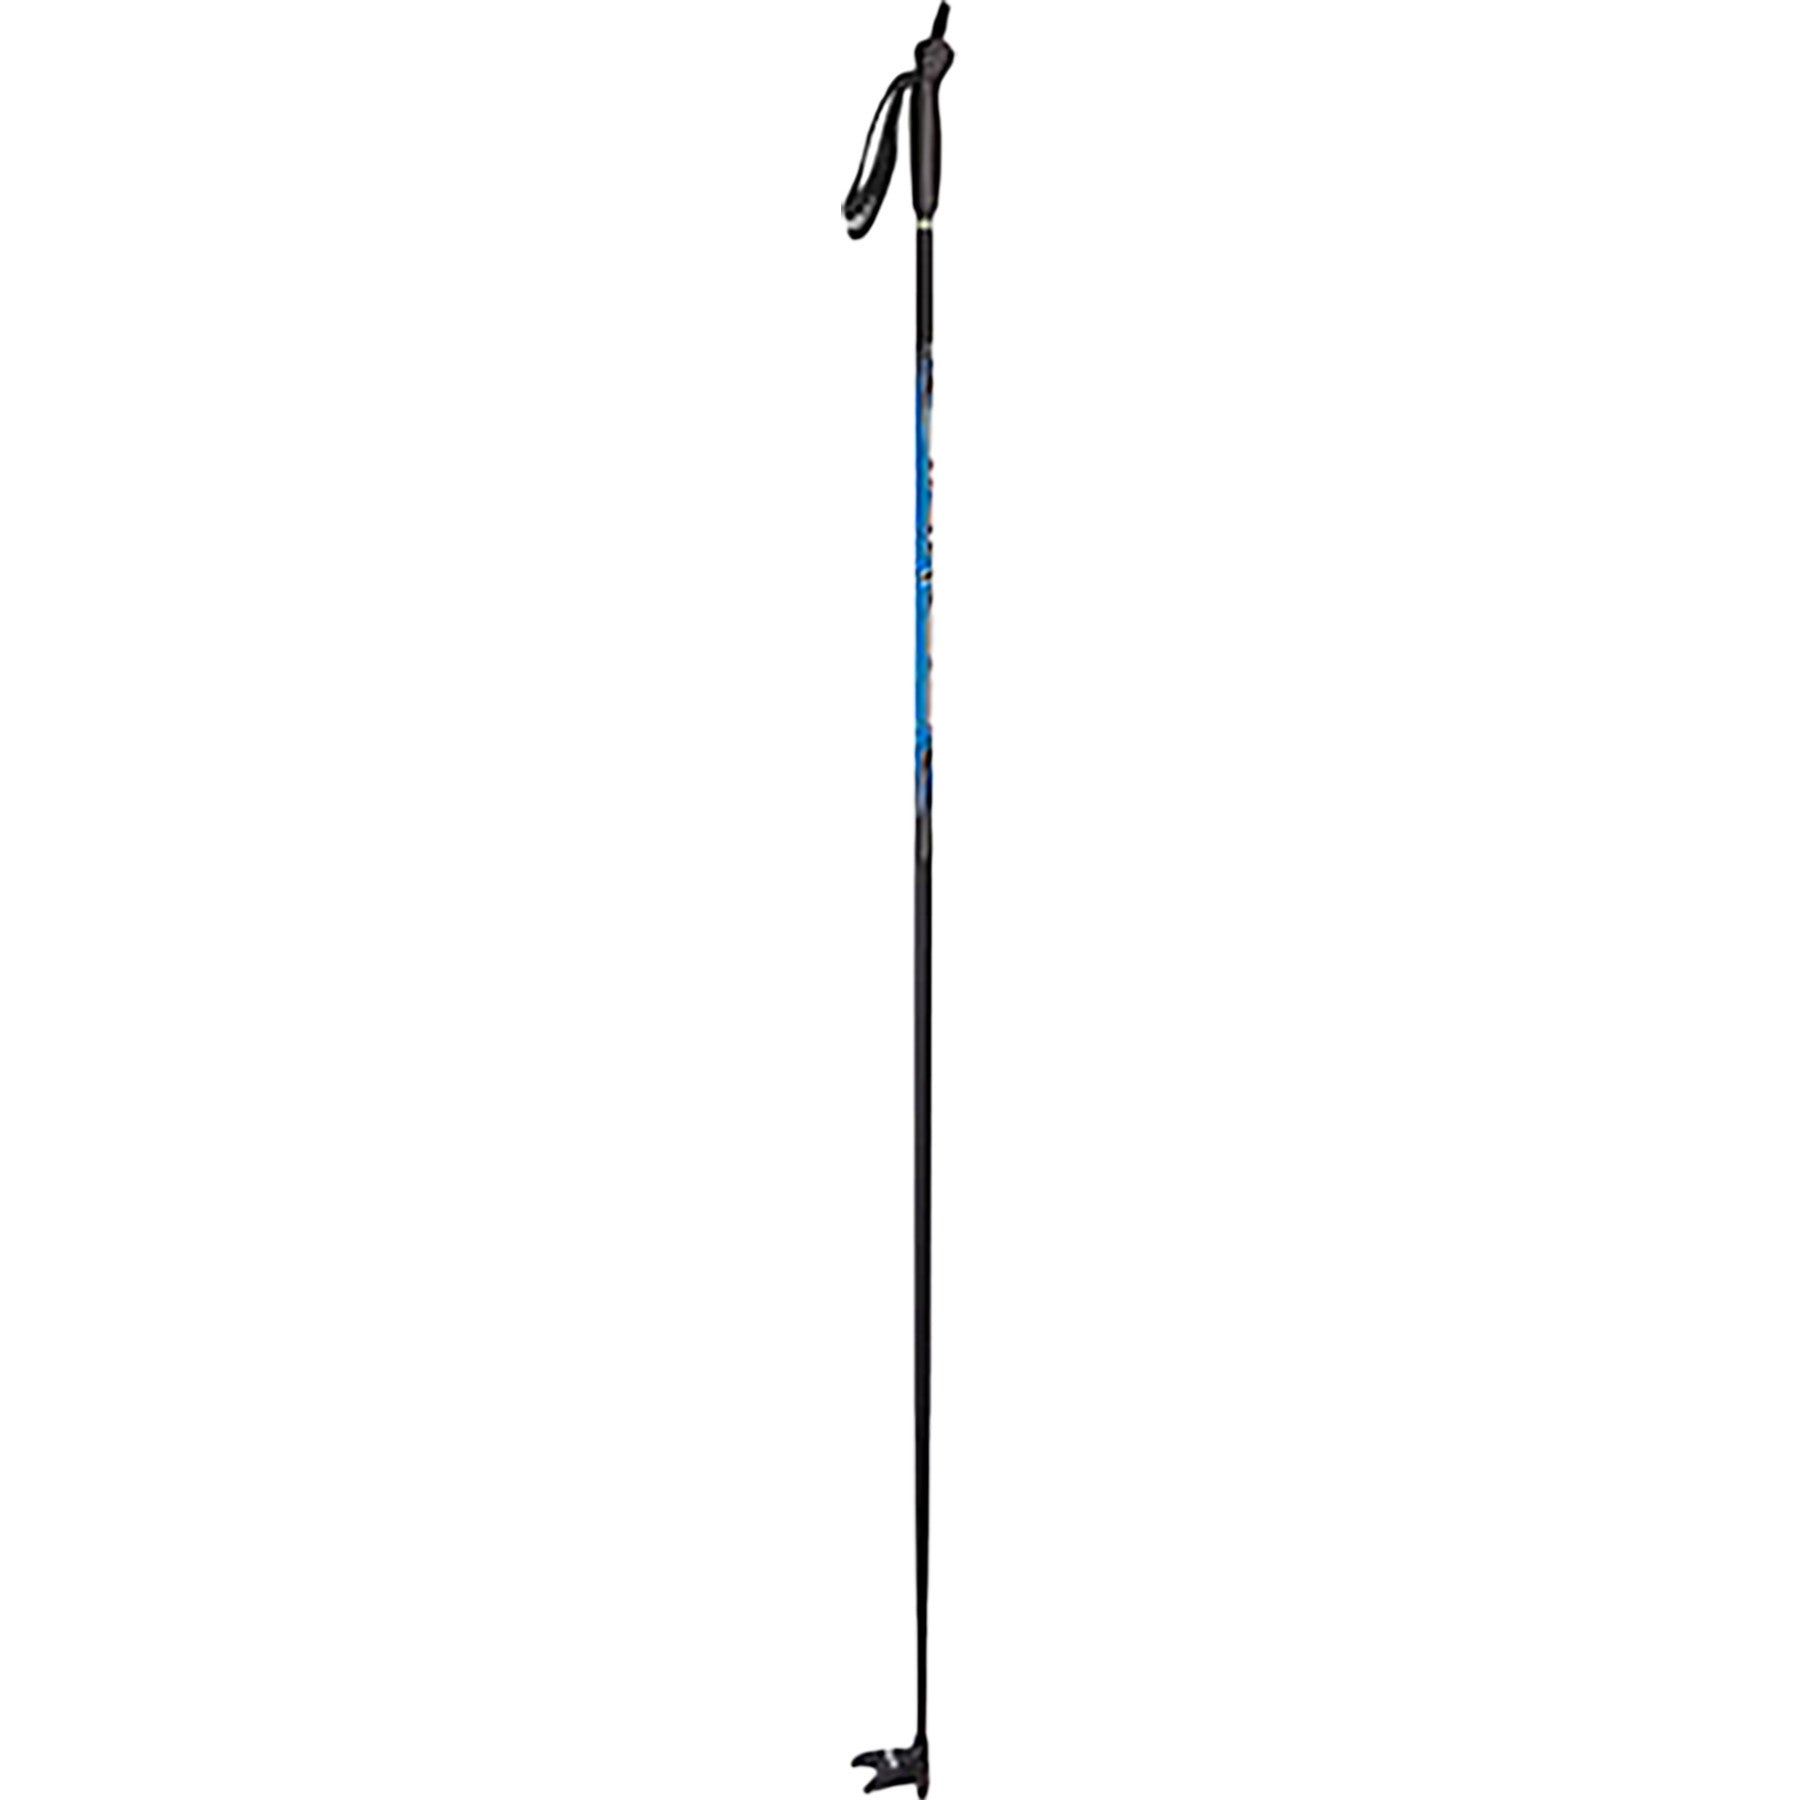 SkiGo Touring Pole